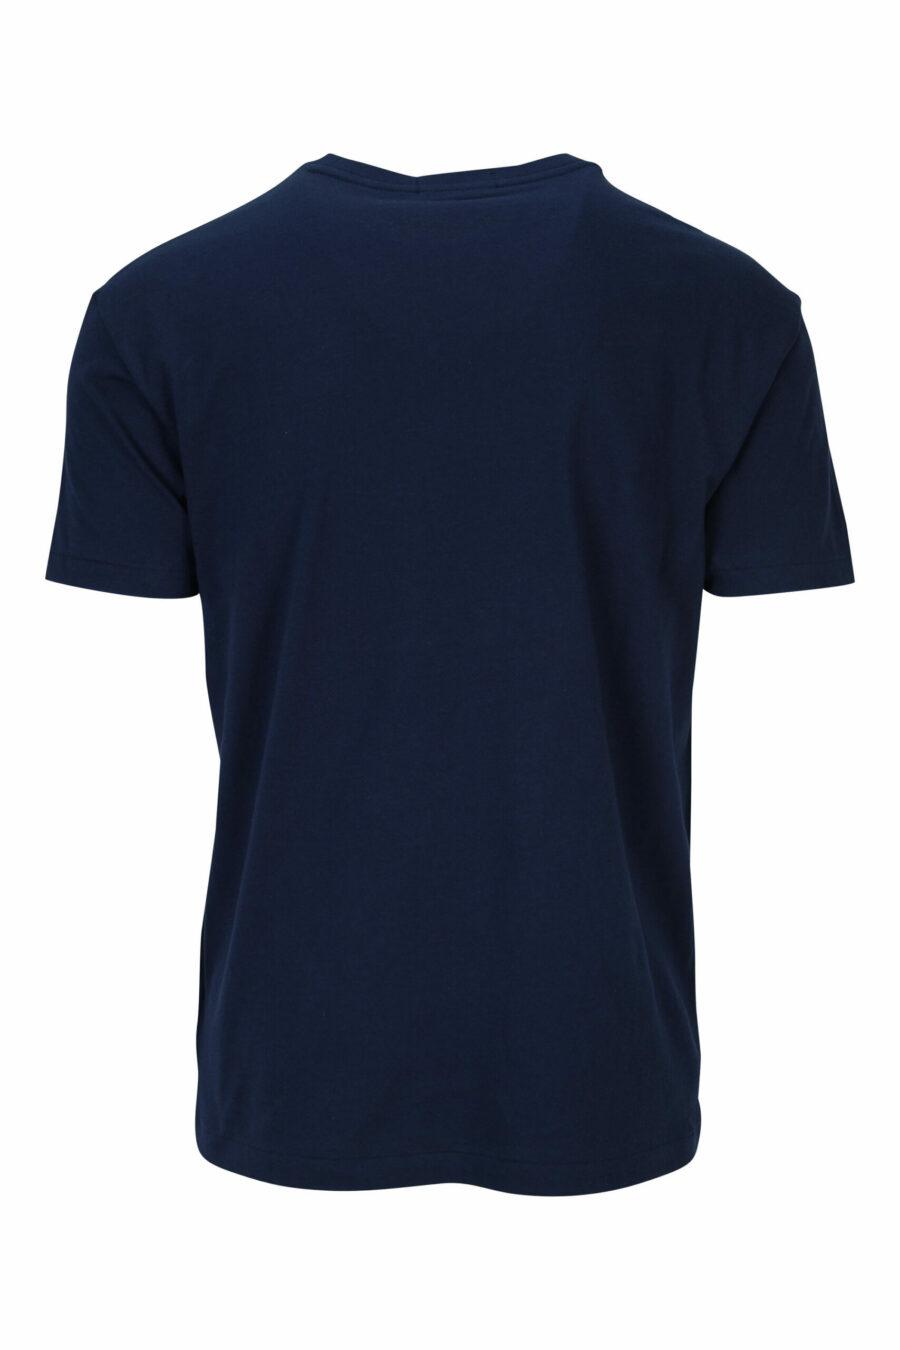 Dark blue T-shirt with white "polo" maxilogo - 3616535909311 1 scaled